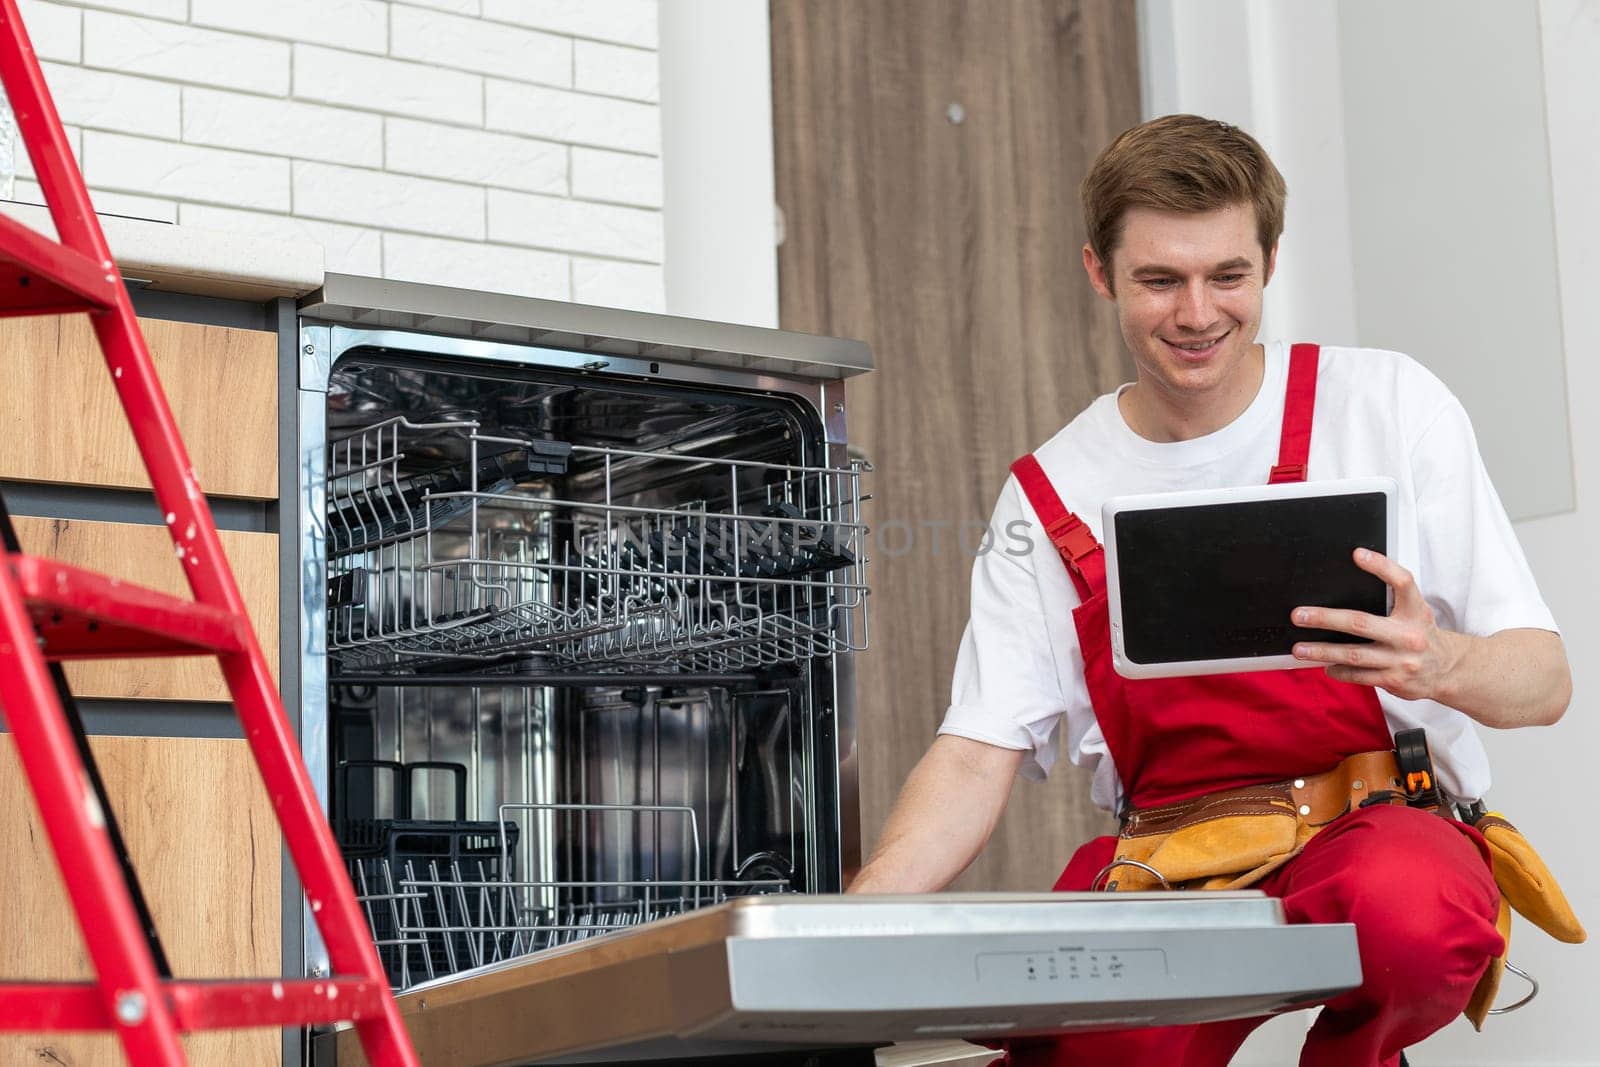 Portrait Of Male Technician Repairing Dishwasher In Kitchen using digital tablet